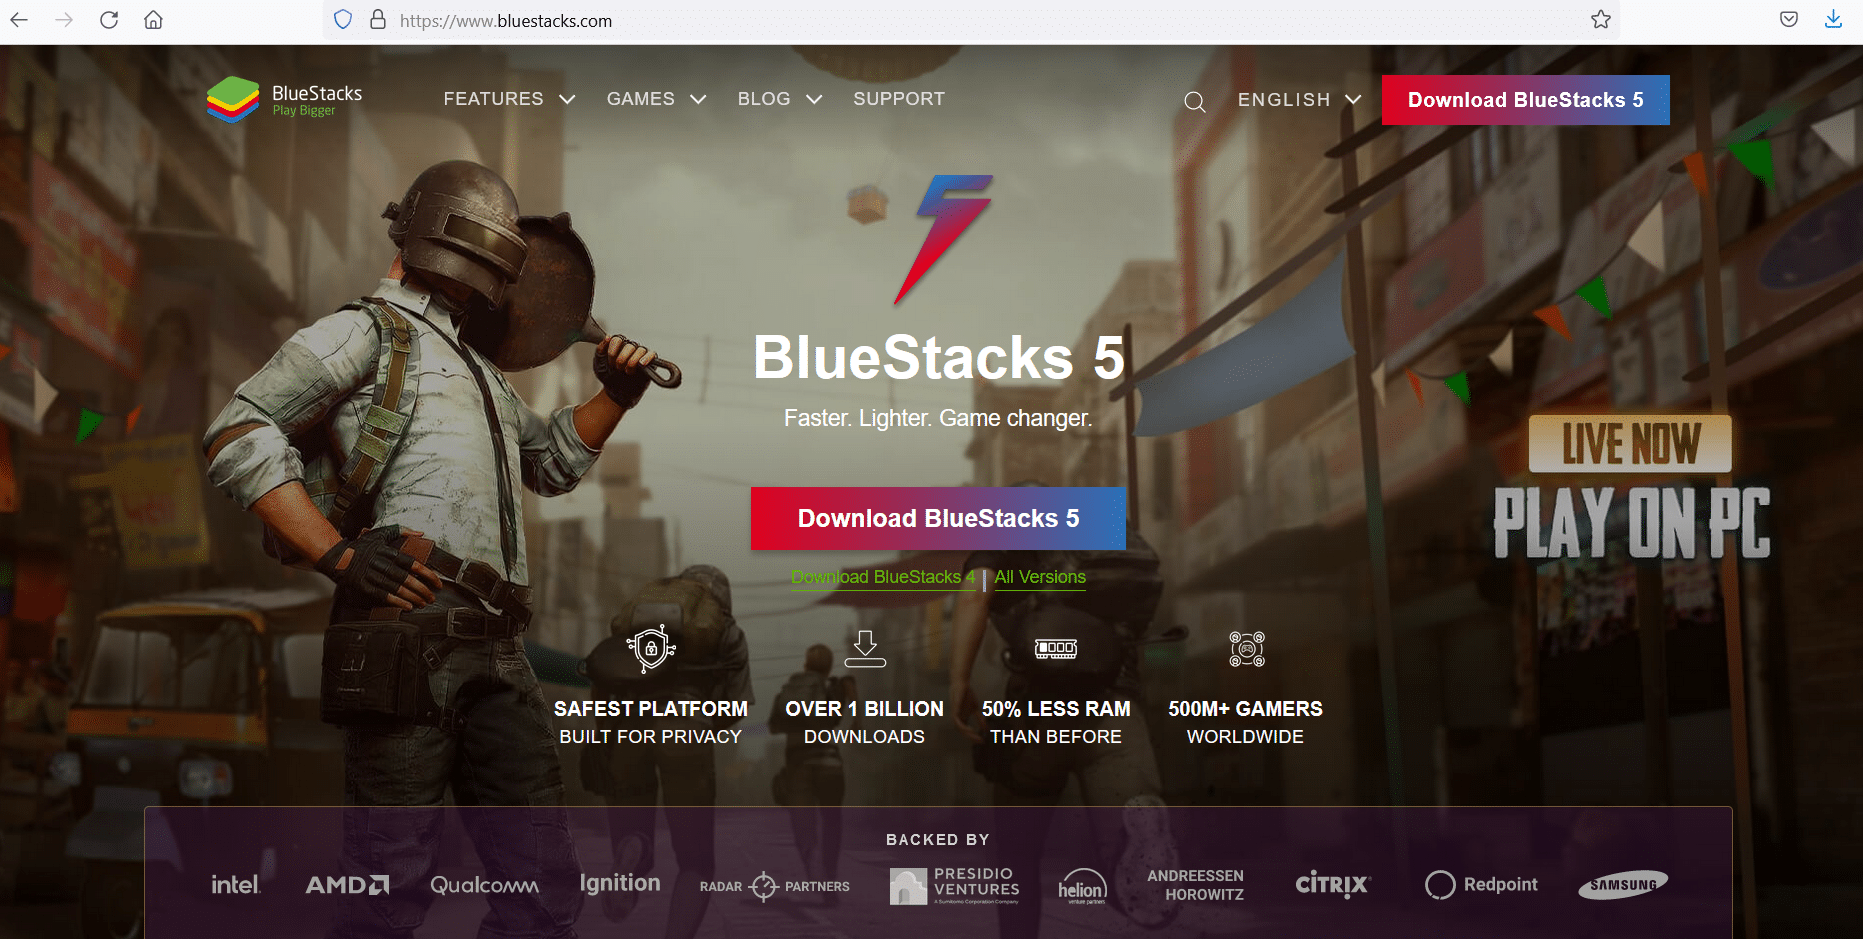 Bluestacks download page